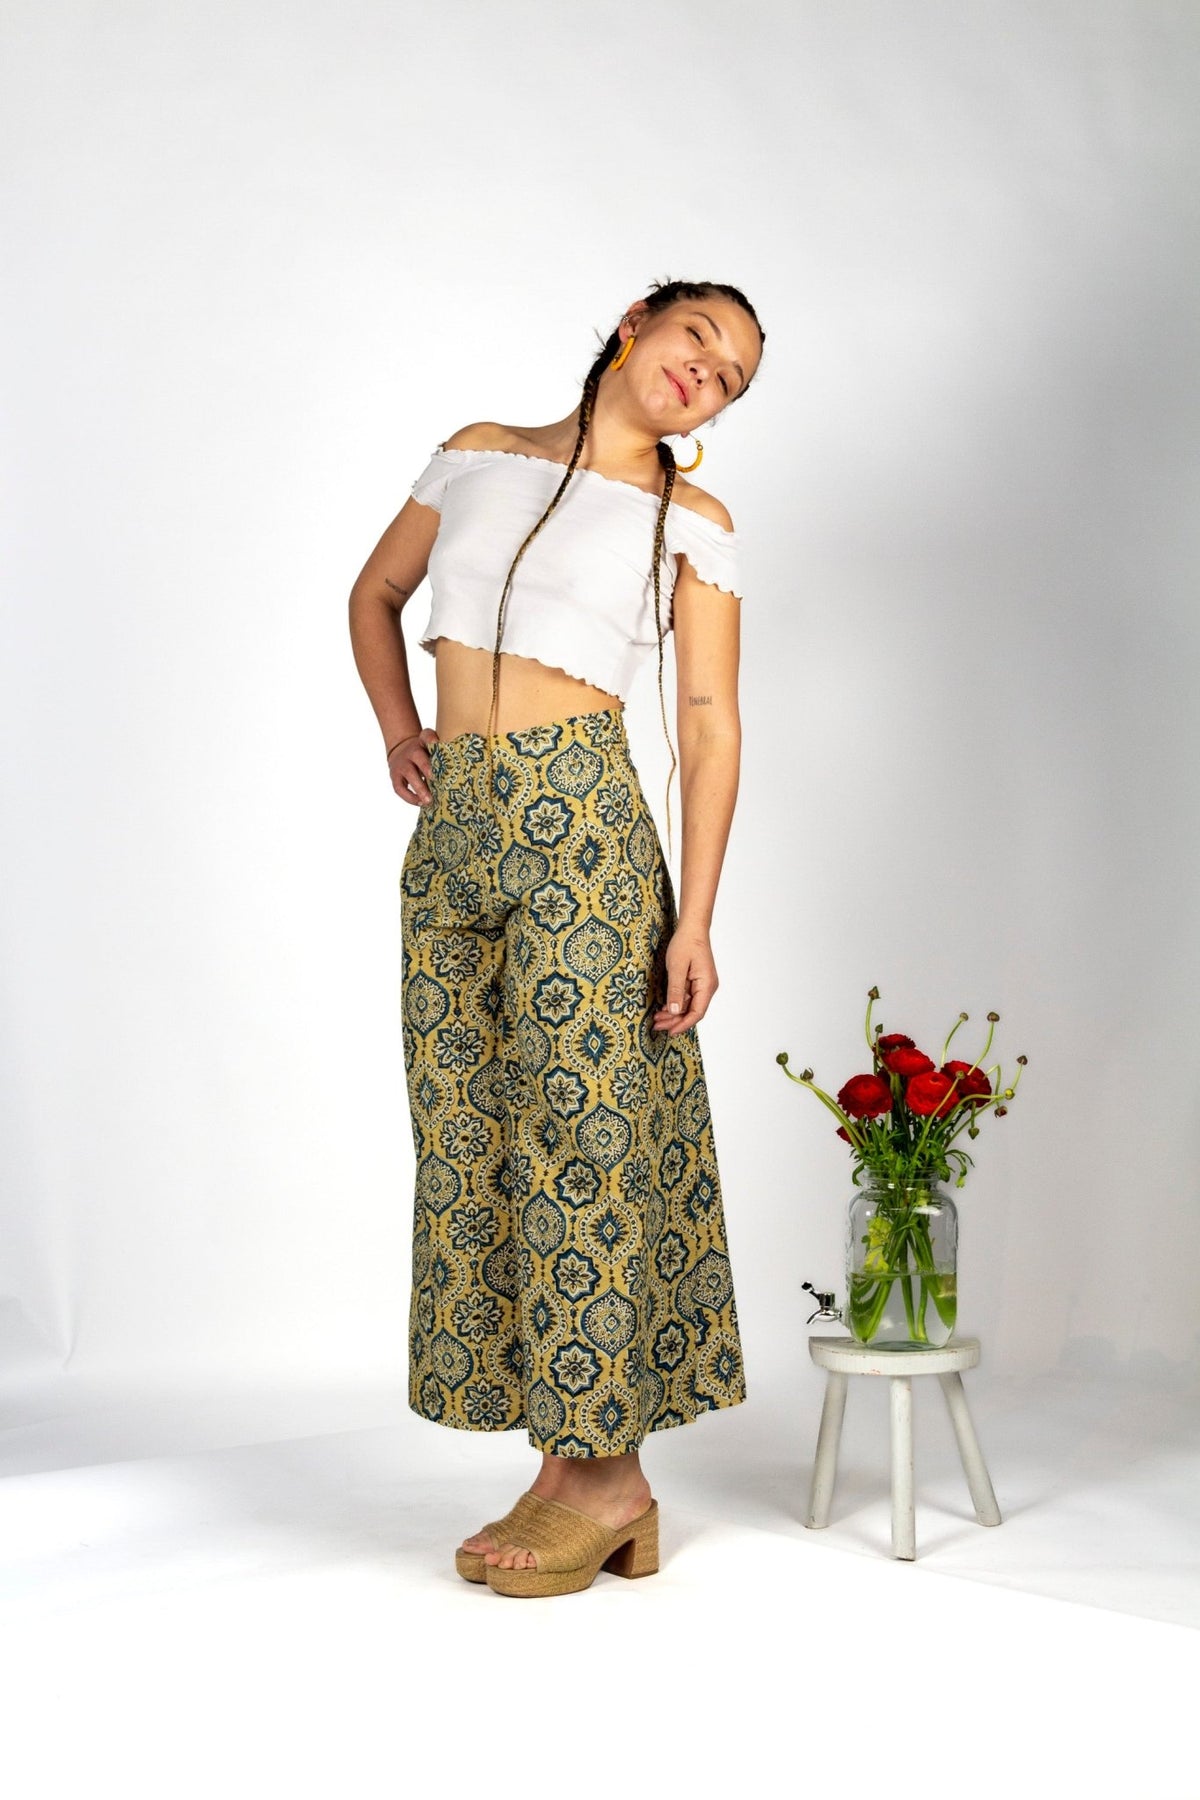 Pantalon Saraswati - Coton bio - Imprimé Mandala - Azaadi, la mode responsable accessible